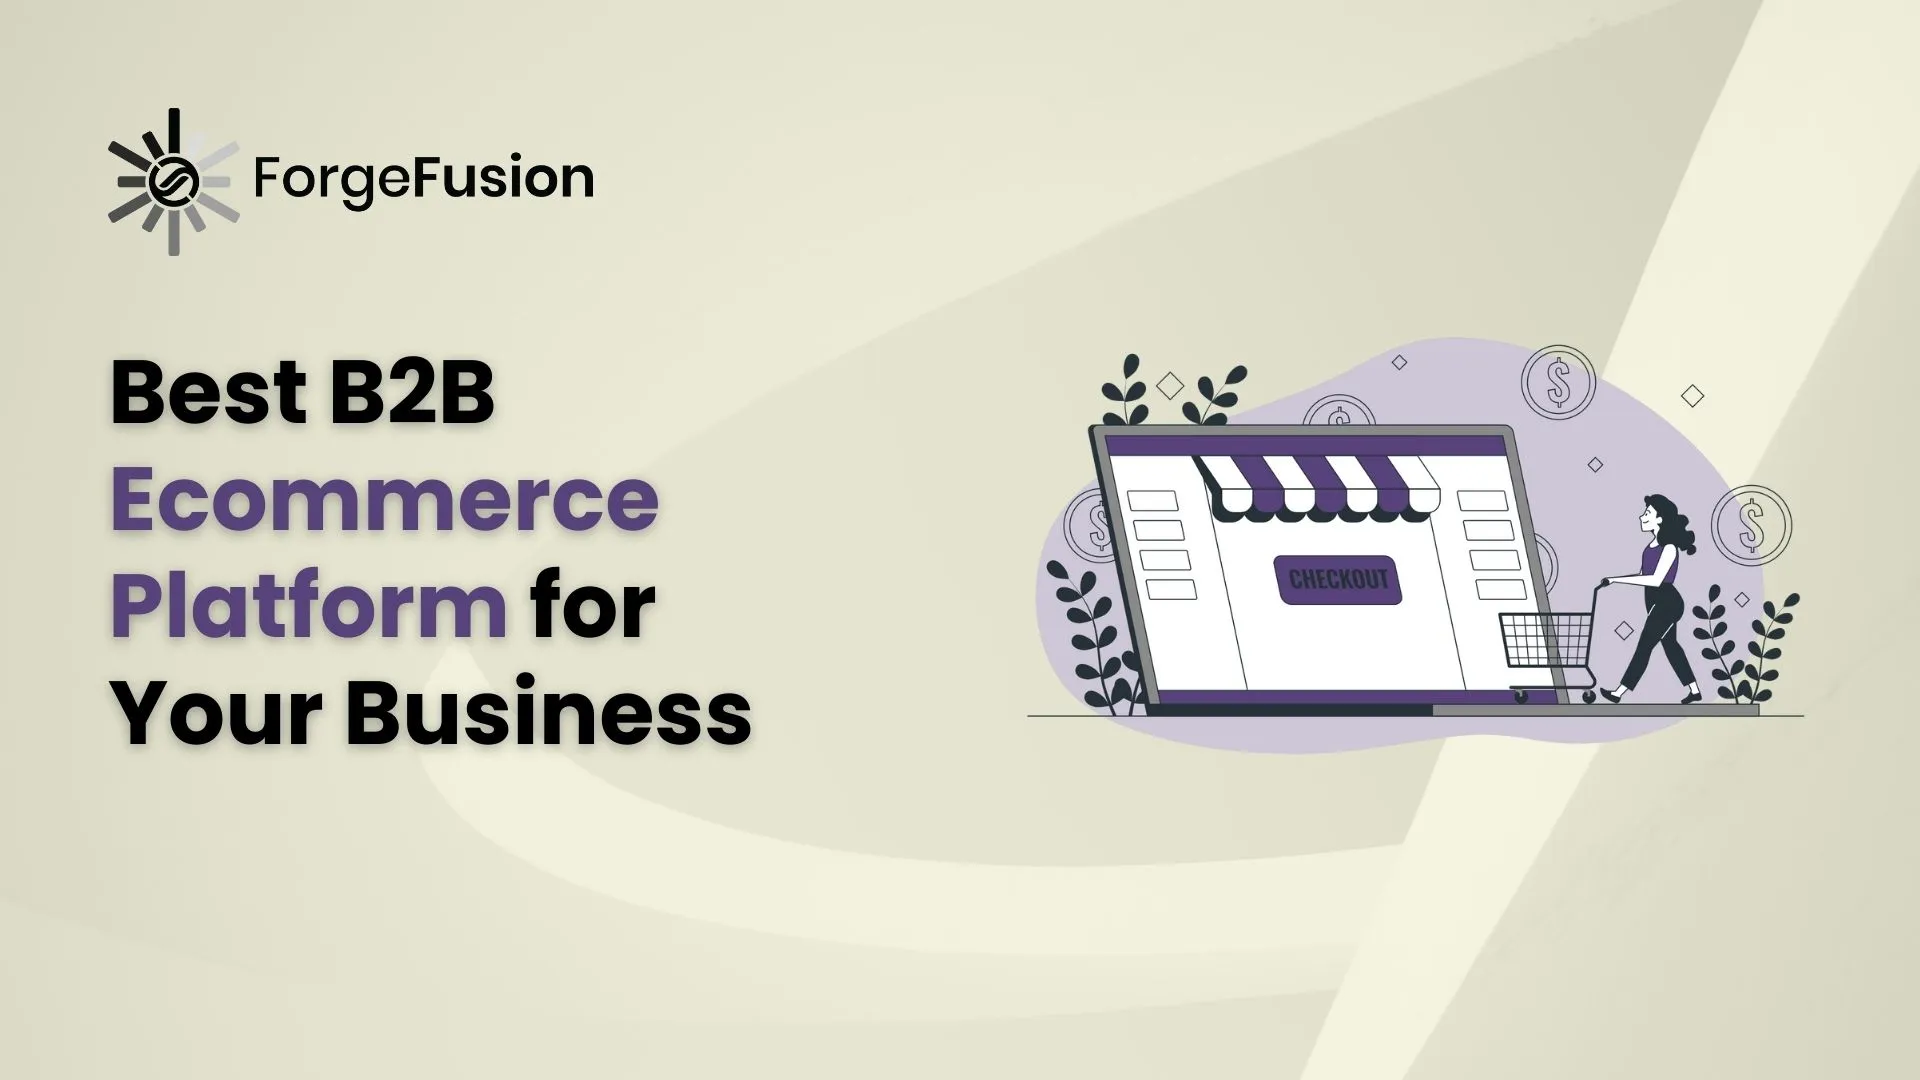 Select the Best B2B Ecommerce Platform